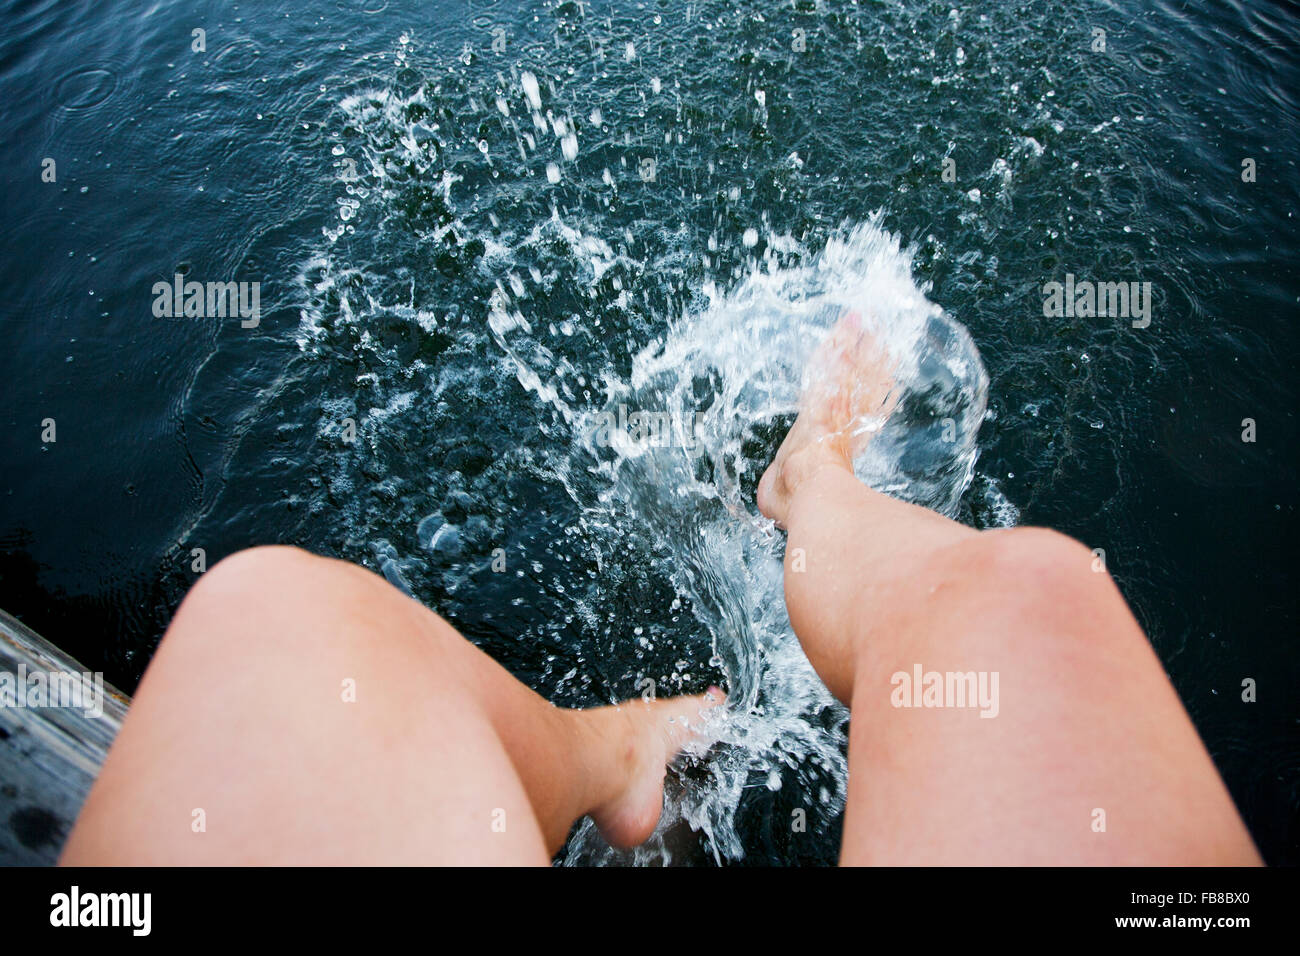 Sweden, Uppland, Stockholm Archipelago, Woman splashing water with feet Stock Photo